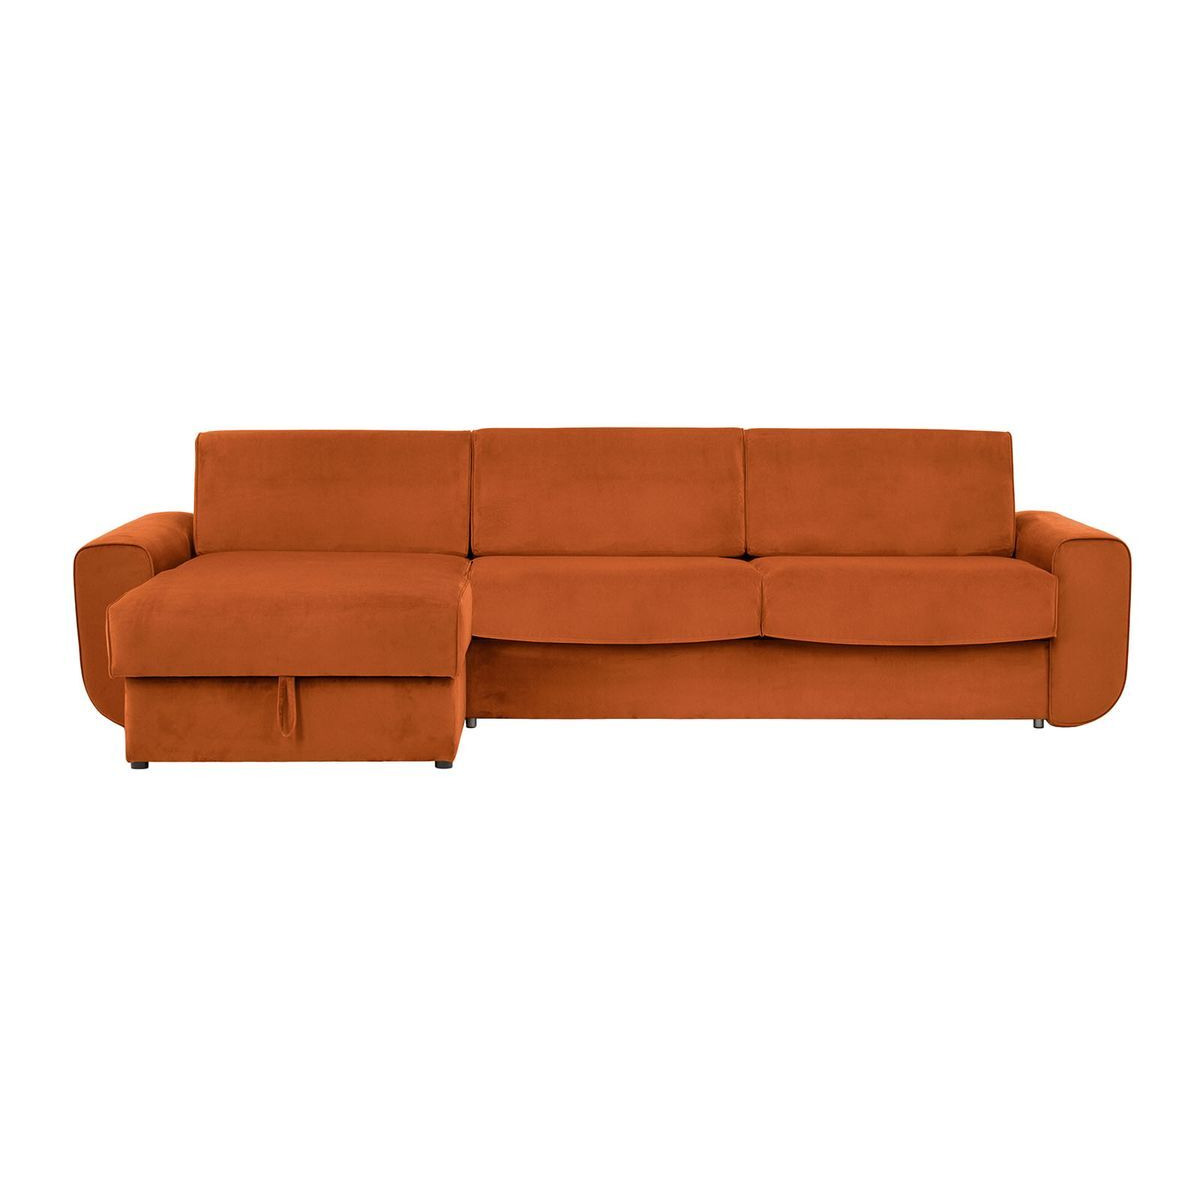 Salsa corner sofa bed with storage, turquoise - image 1